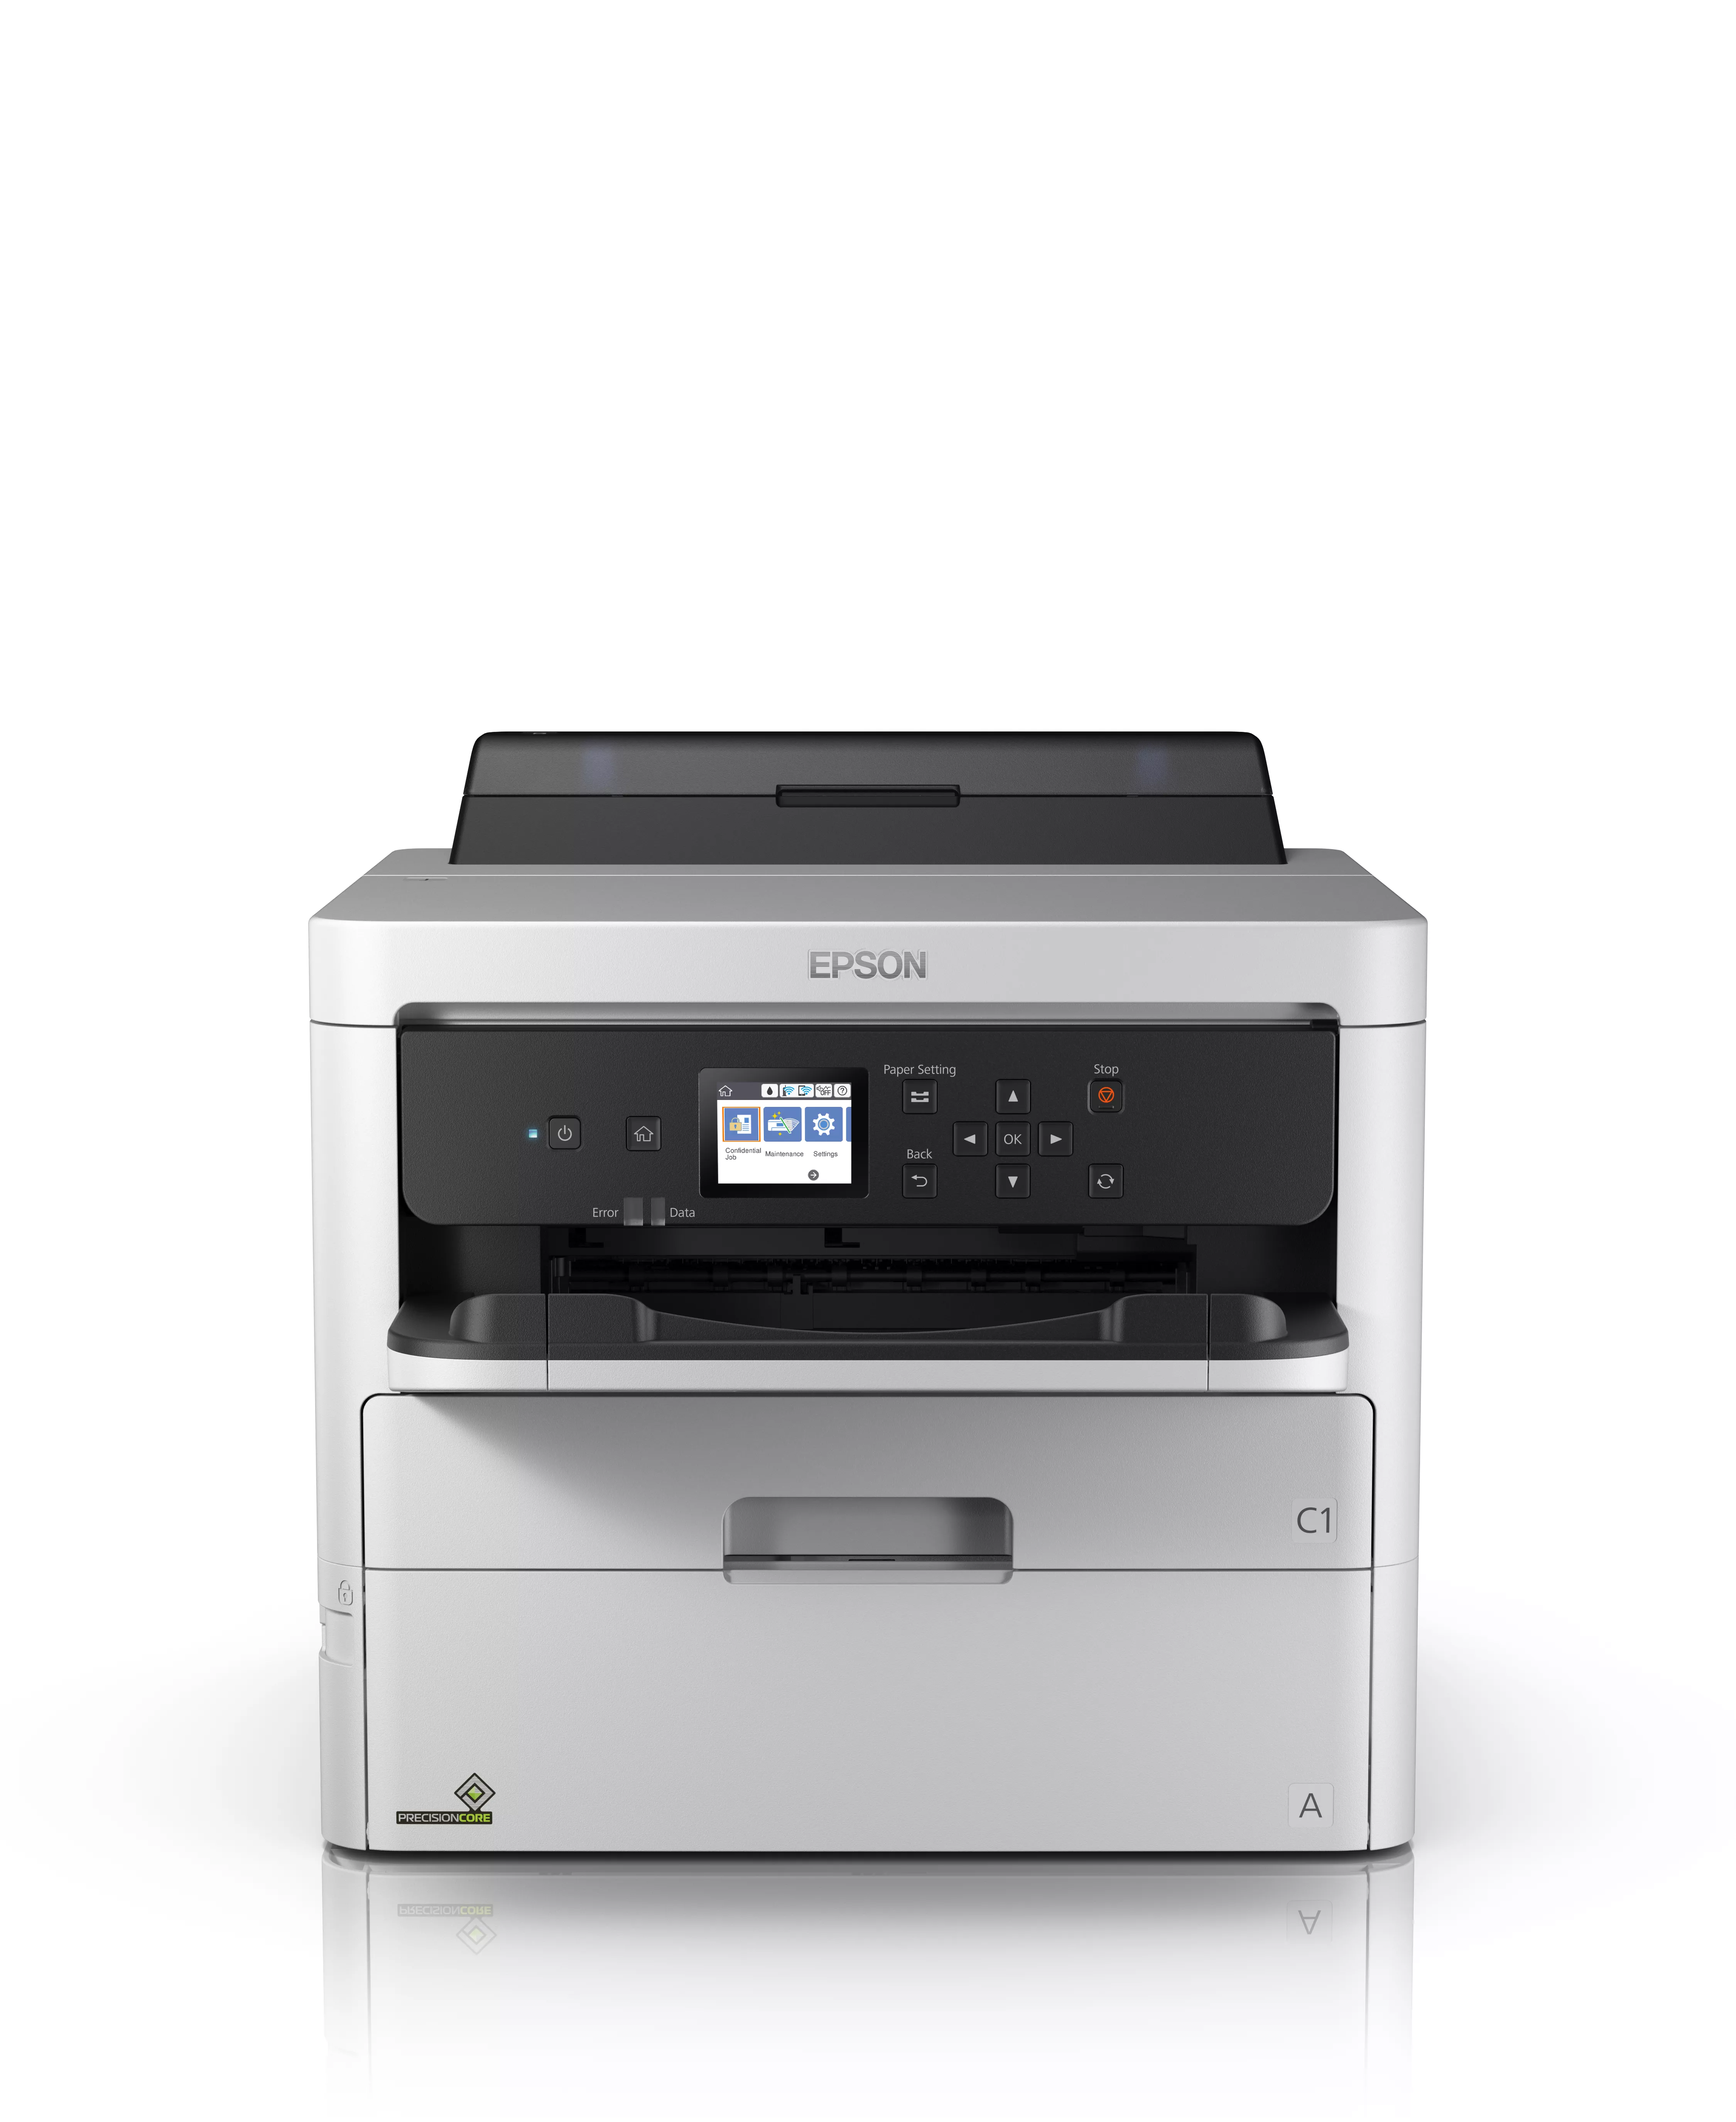 Vente EPSON WorkForce Pro WF-C529RDW inkjet printer 24ppm au meilleur prix